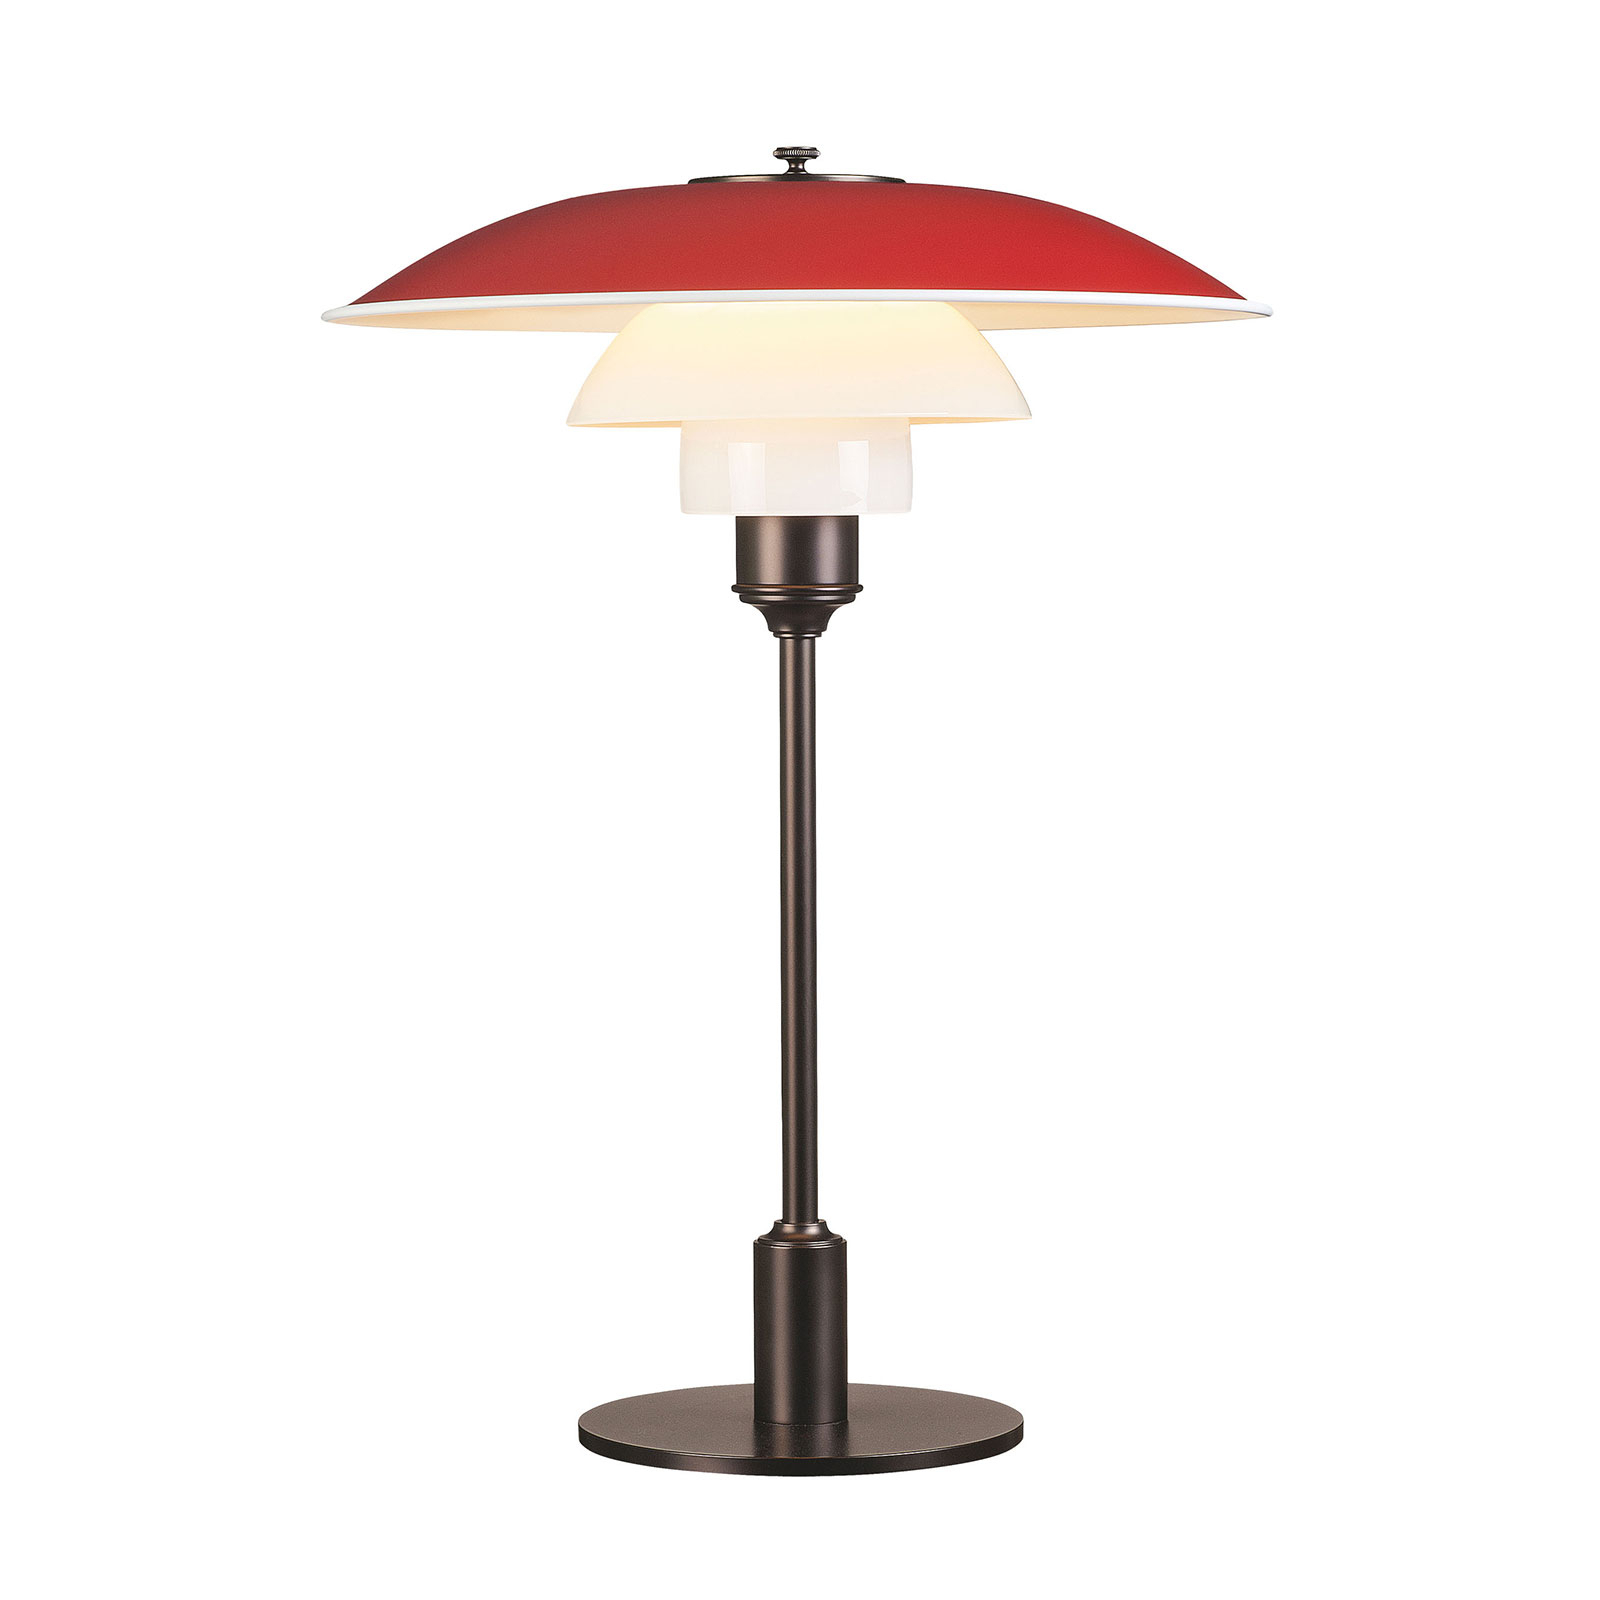 Louis Poulsen PH 3 1/2-2 1/2 table lamp brown/red